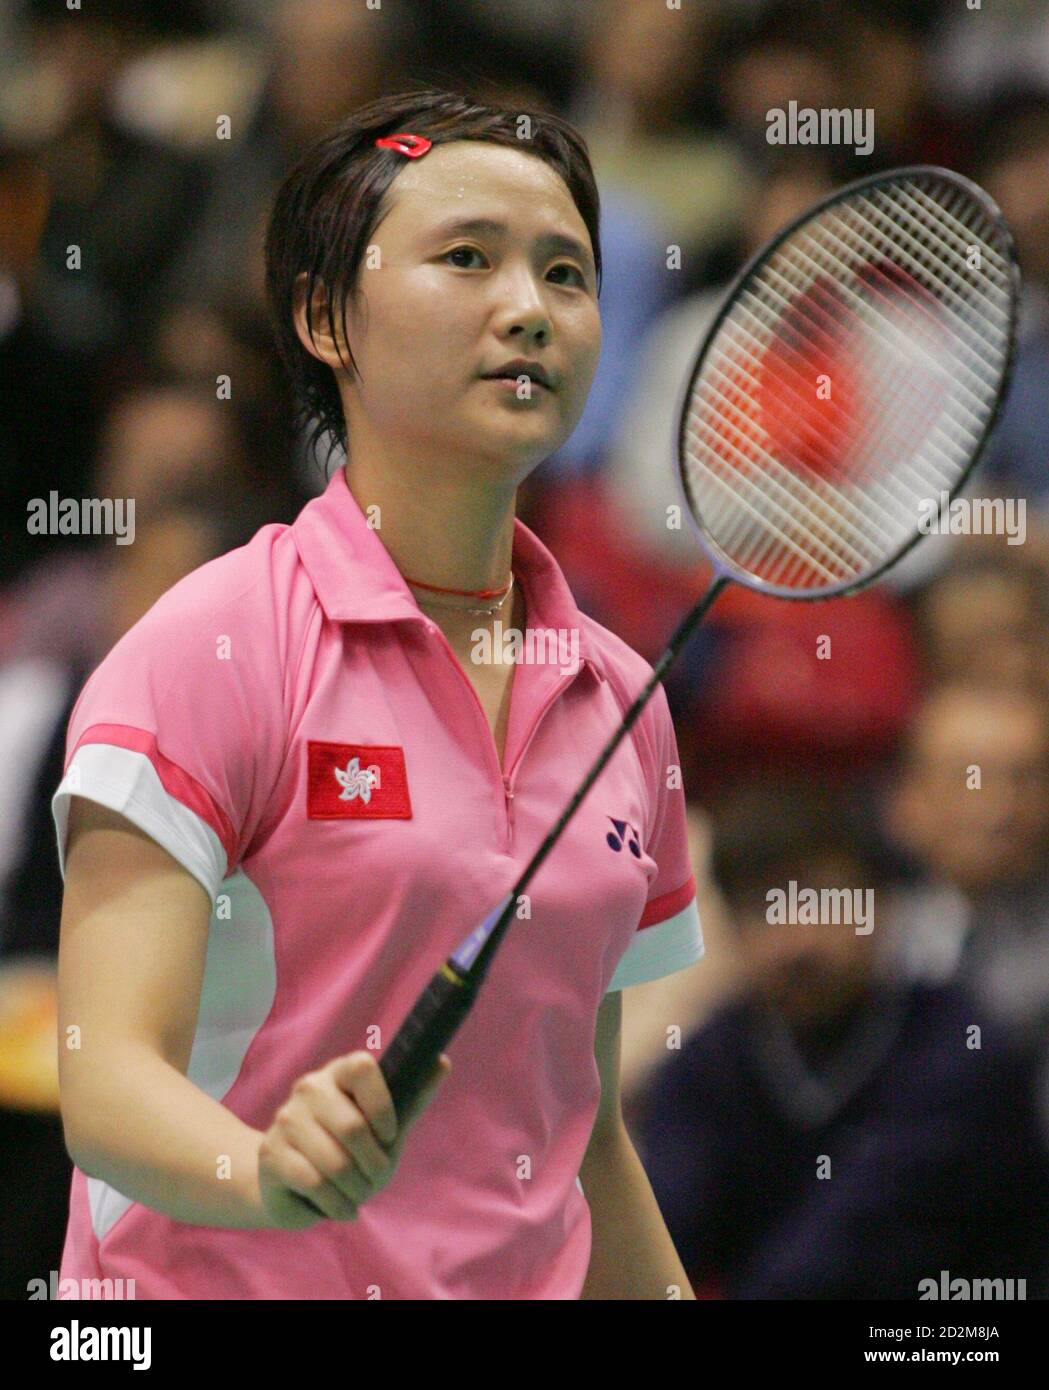 Hong Kong's Wang Chen competes against Germany's Xu Huaiwen during their  quarterfinals Uber Cup badminton match in Tokyo. Wang won the match.  REUTERS/Yuriko Nakao Stock Photo - Alamy